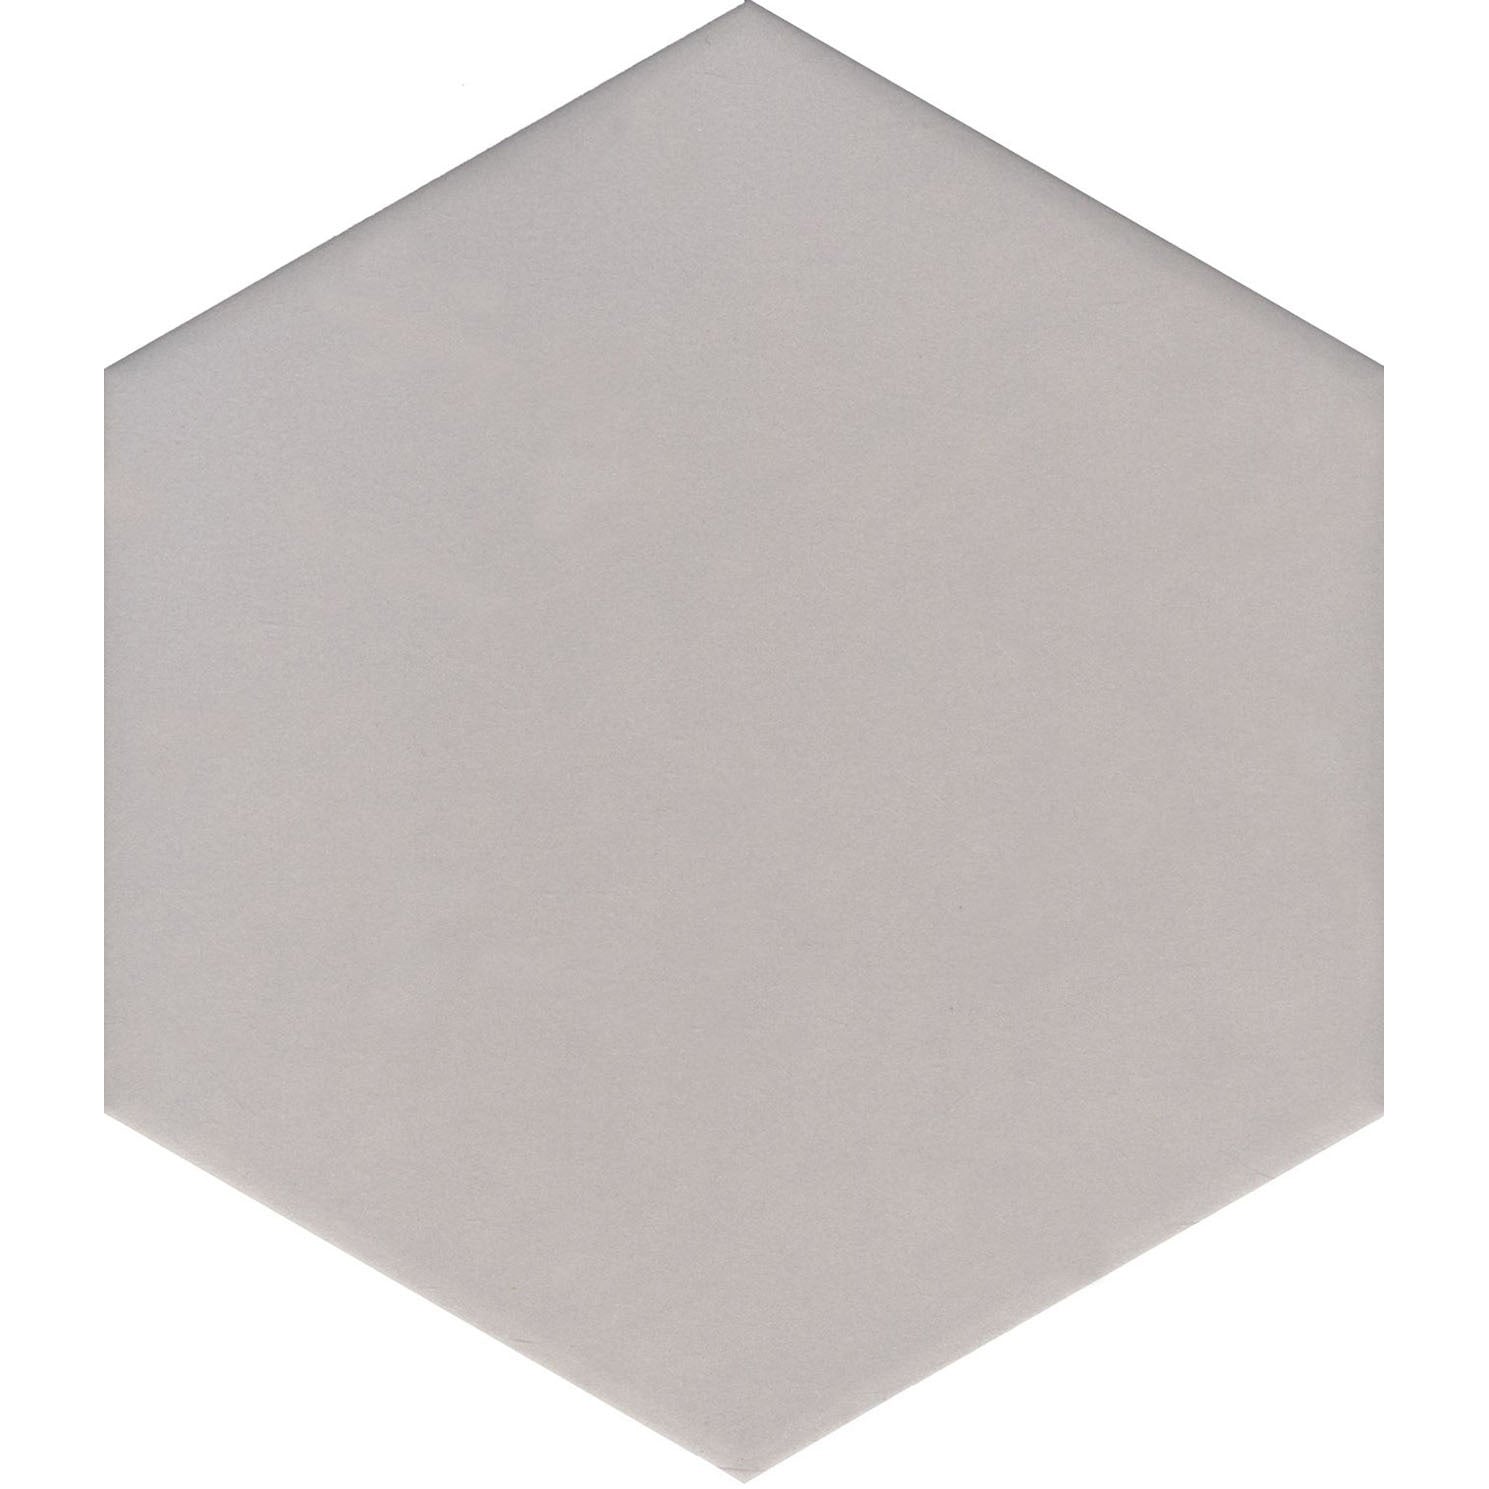 Floors 2000 - Solids - 8.5 in. x 10 in. Porcelain Hexagon Tile - Silver